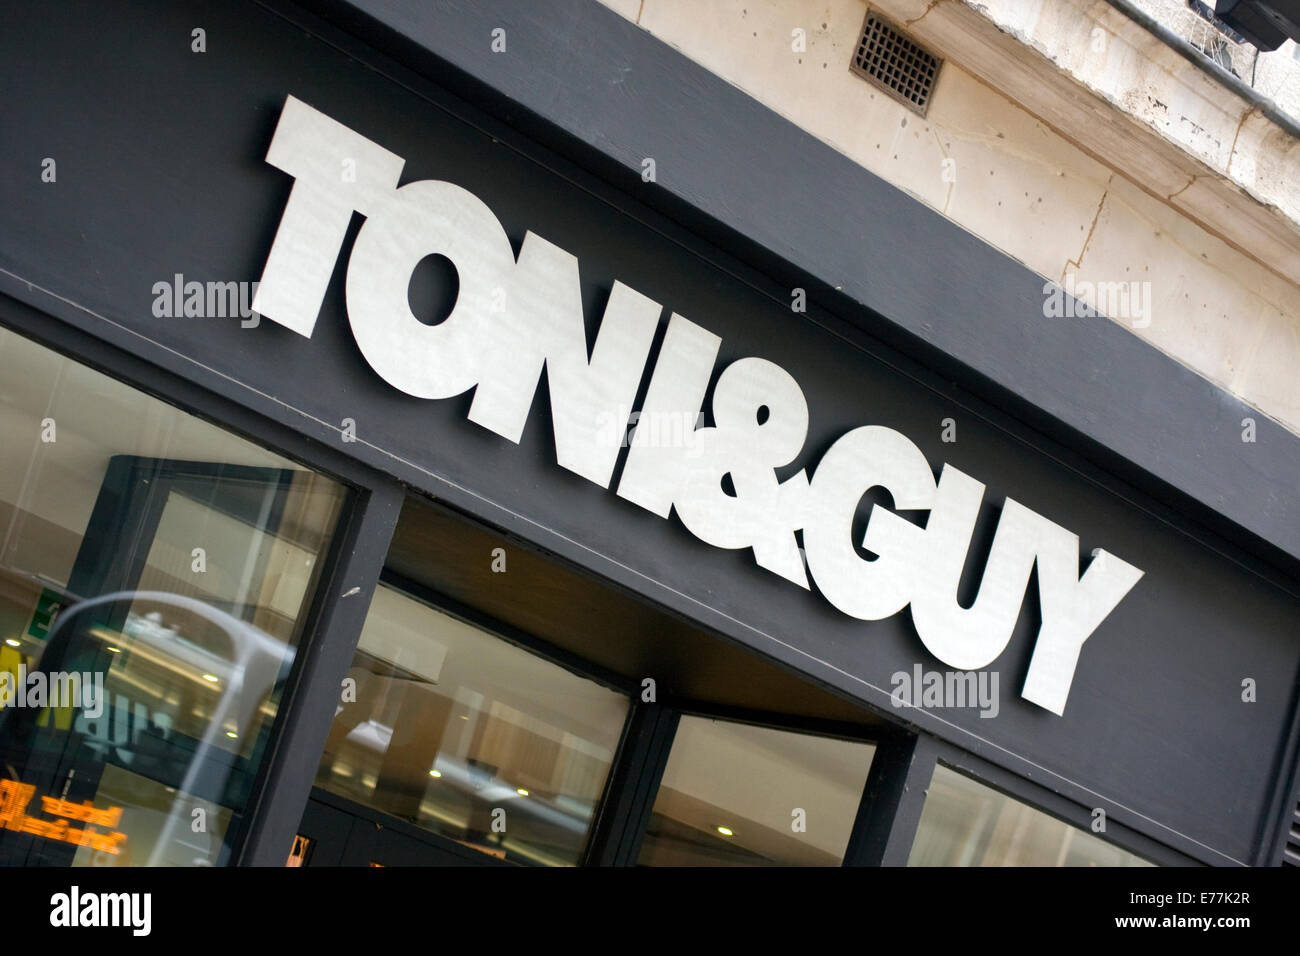 Toni & Guy Stock Photo